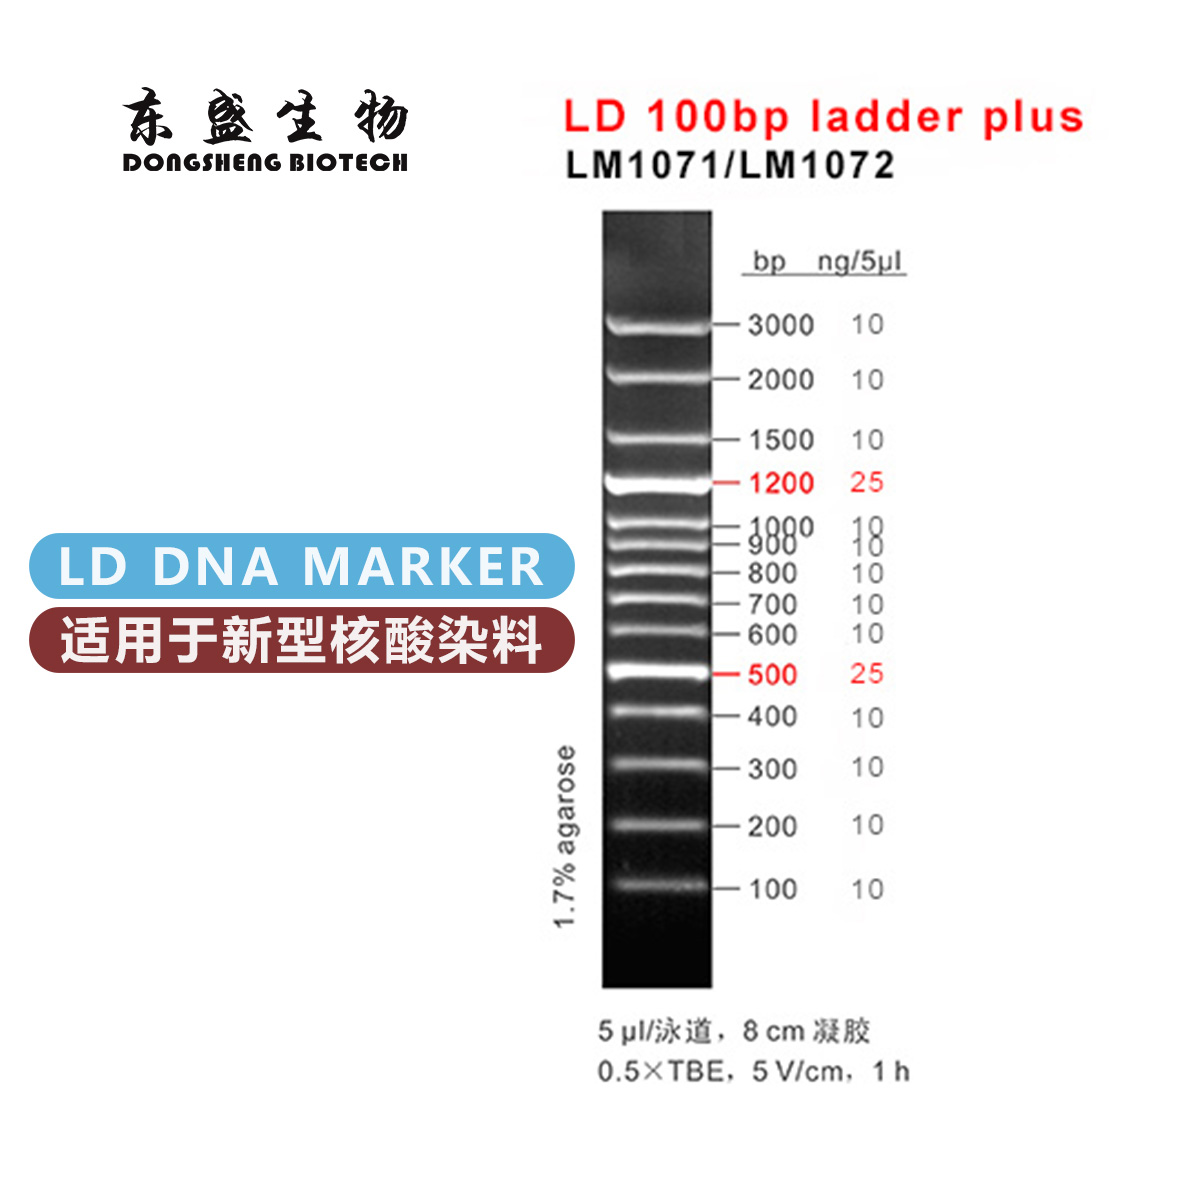 东盛LD 100bp ladder plus 新型染料专用DNA Marker (LM1071-LM1072)